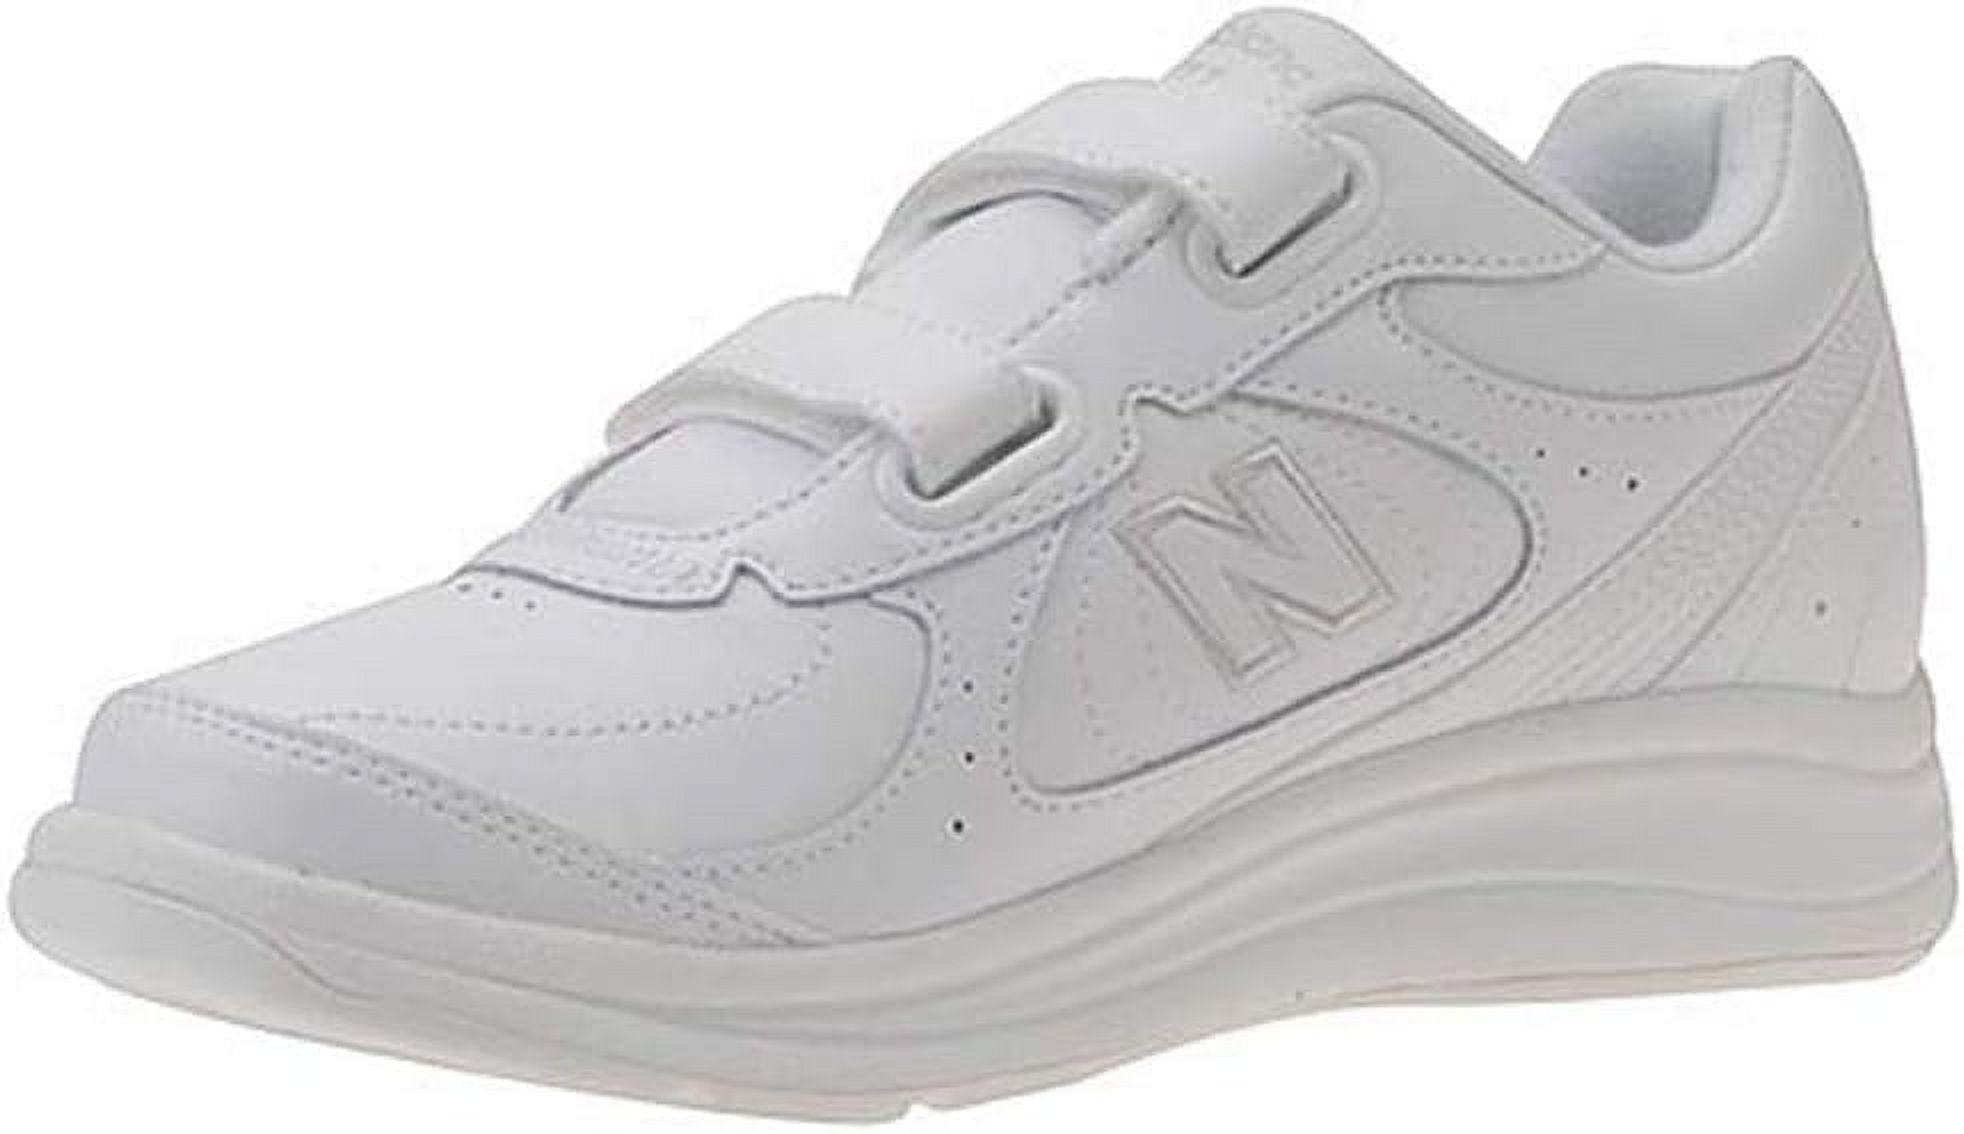 New Balance Women's 577 V1 Hook and Loop Walking Shoe 8.5 White ...